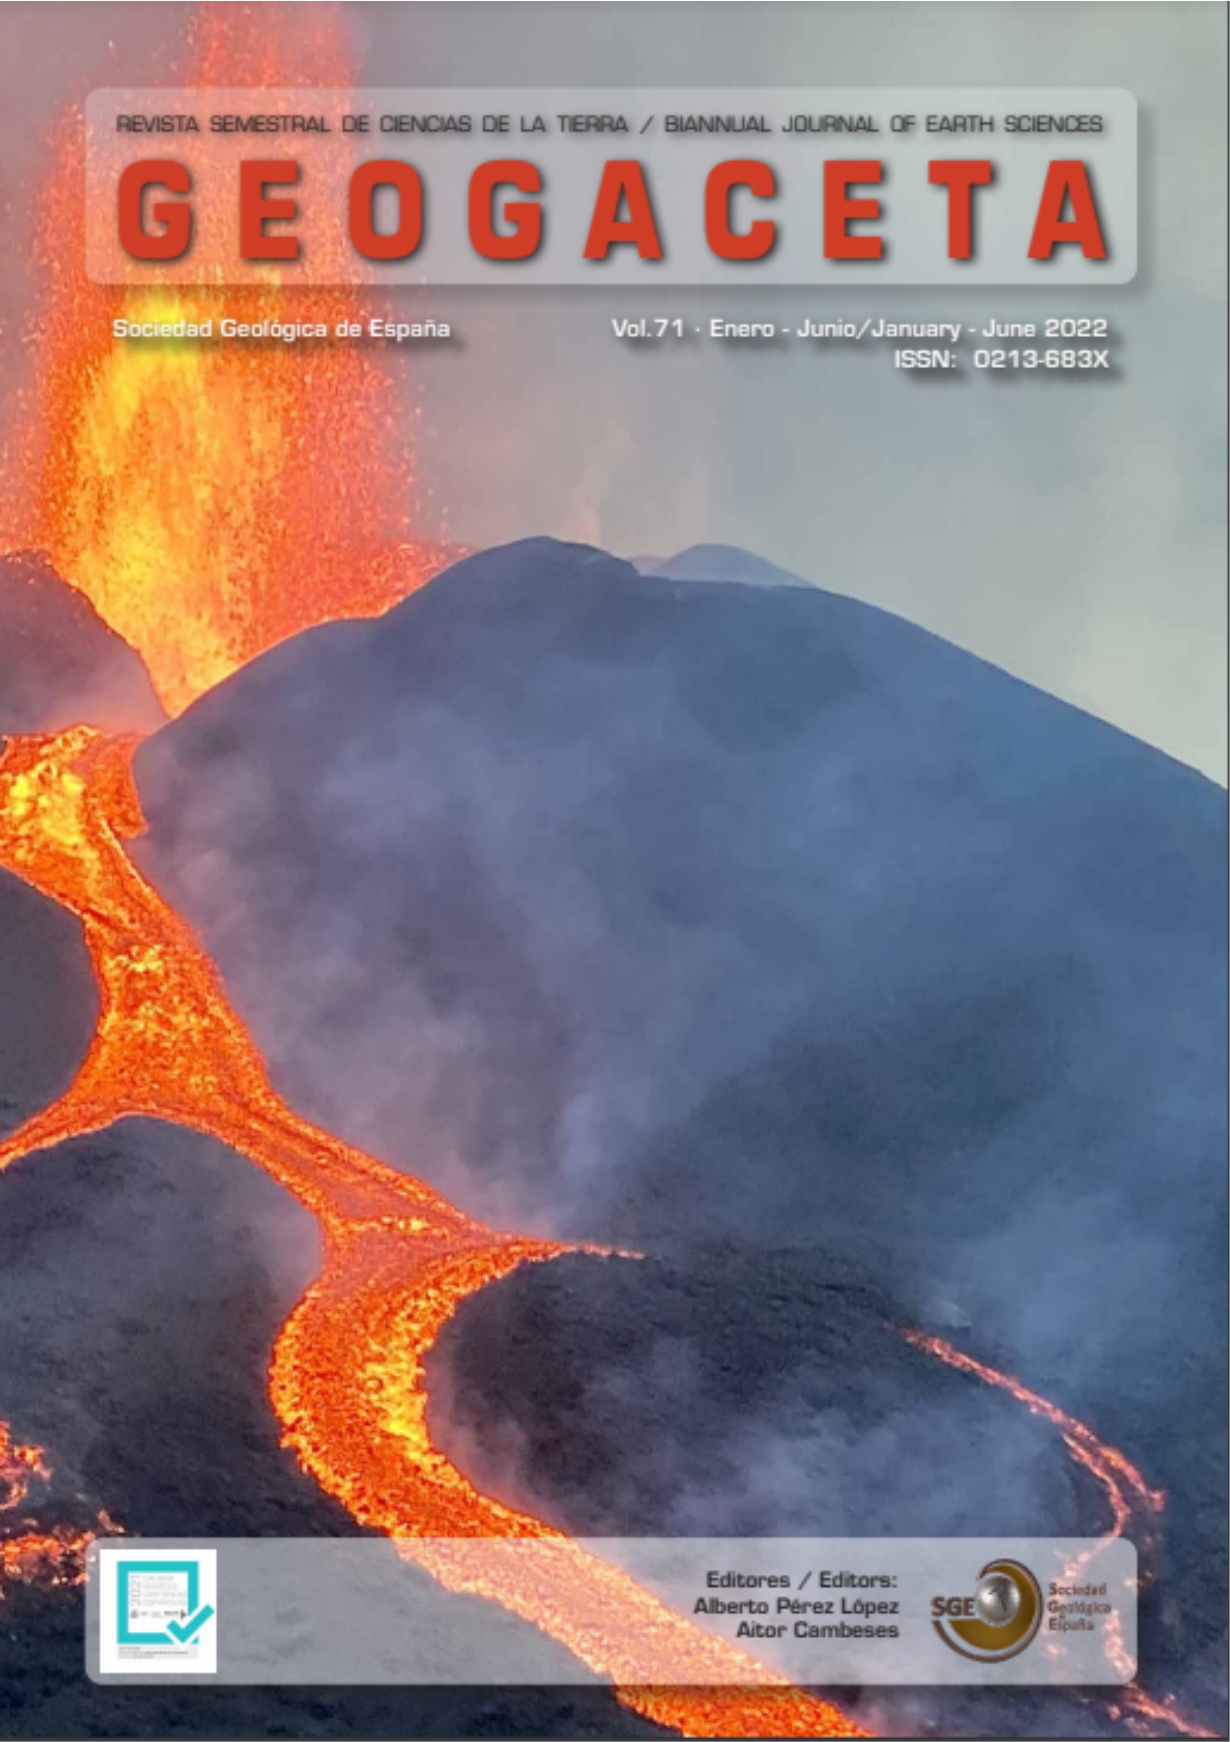 Erupción de La Palma de 2021 (Cumbre Vieja, 19 septiembre a 13 de diciembre de 2021).